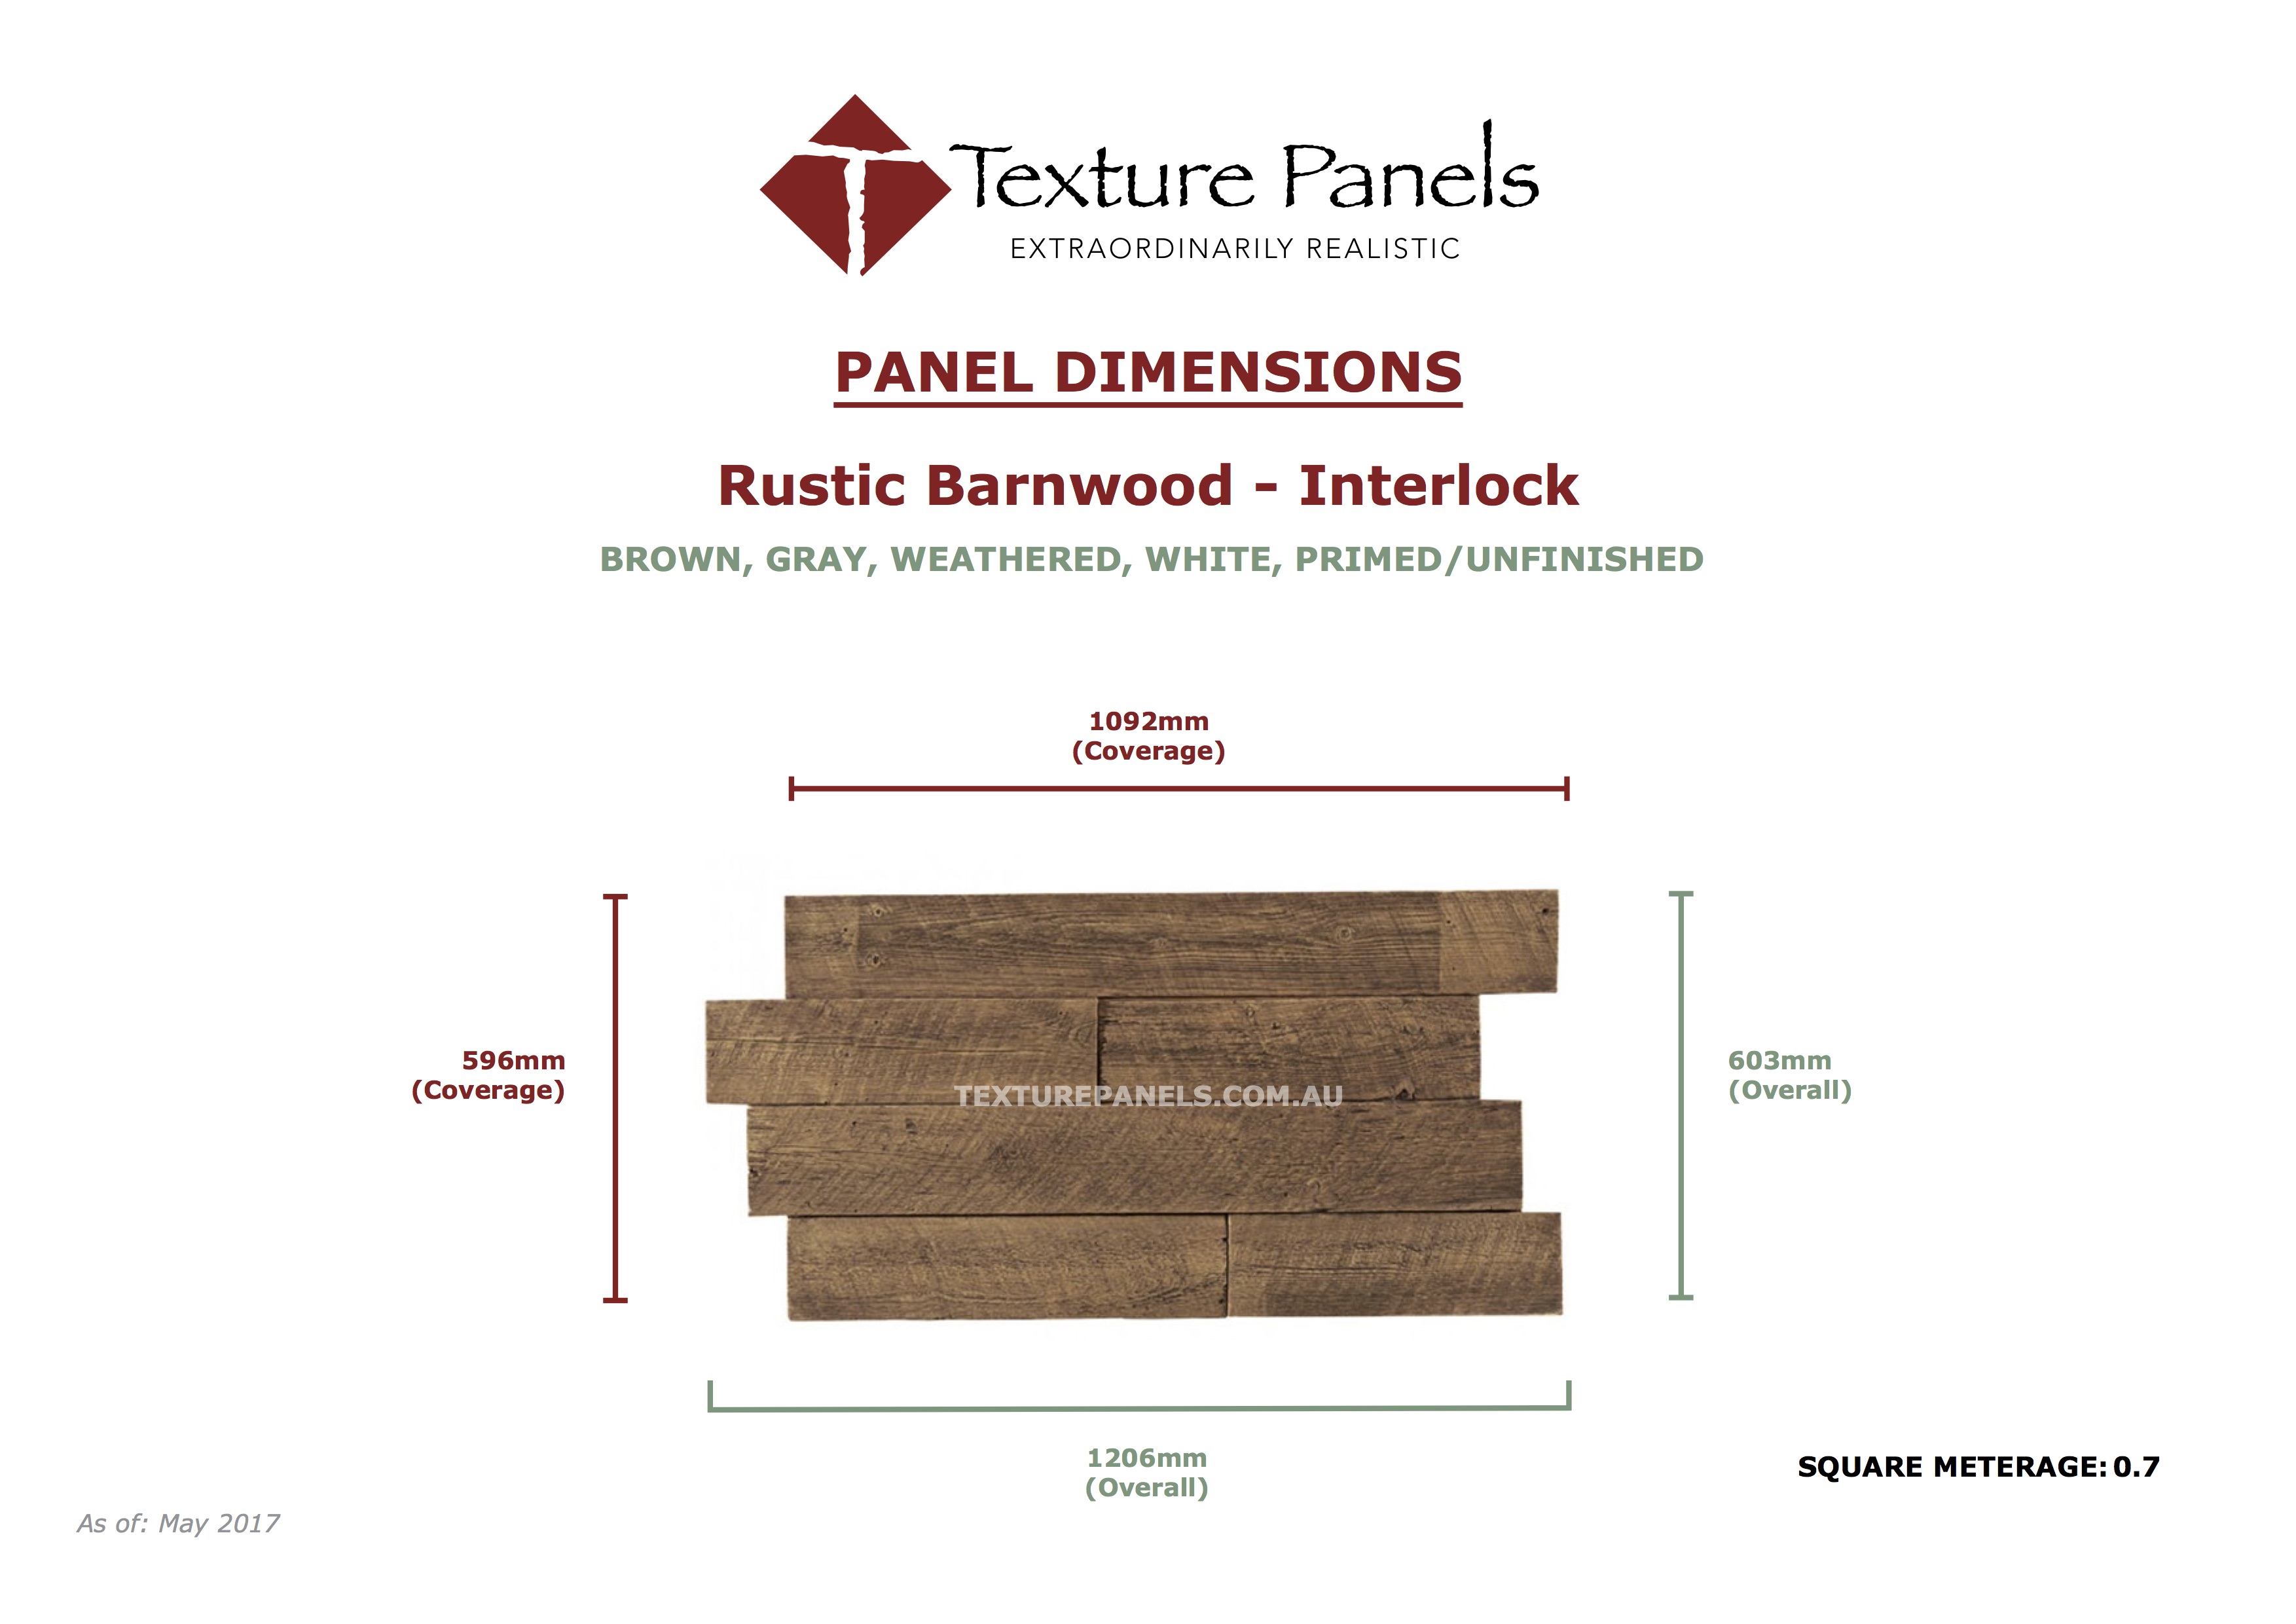 Rustic Barnwood Interlocked - Dimensions